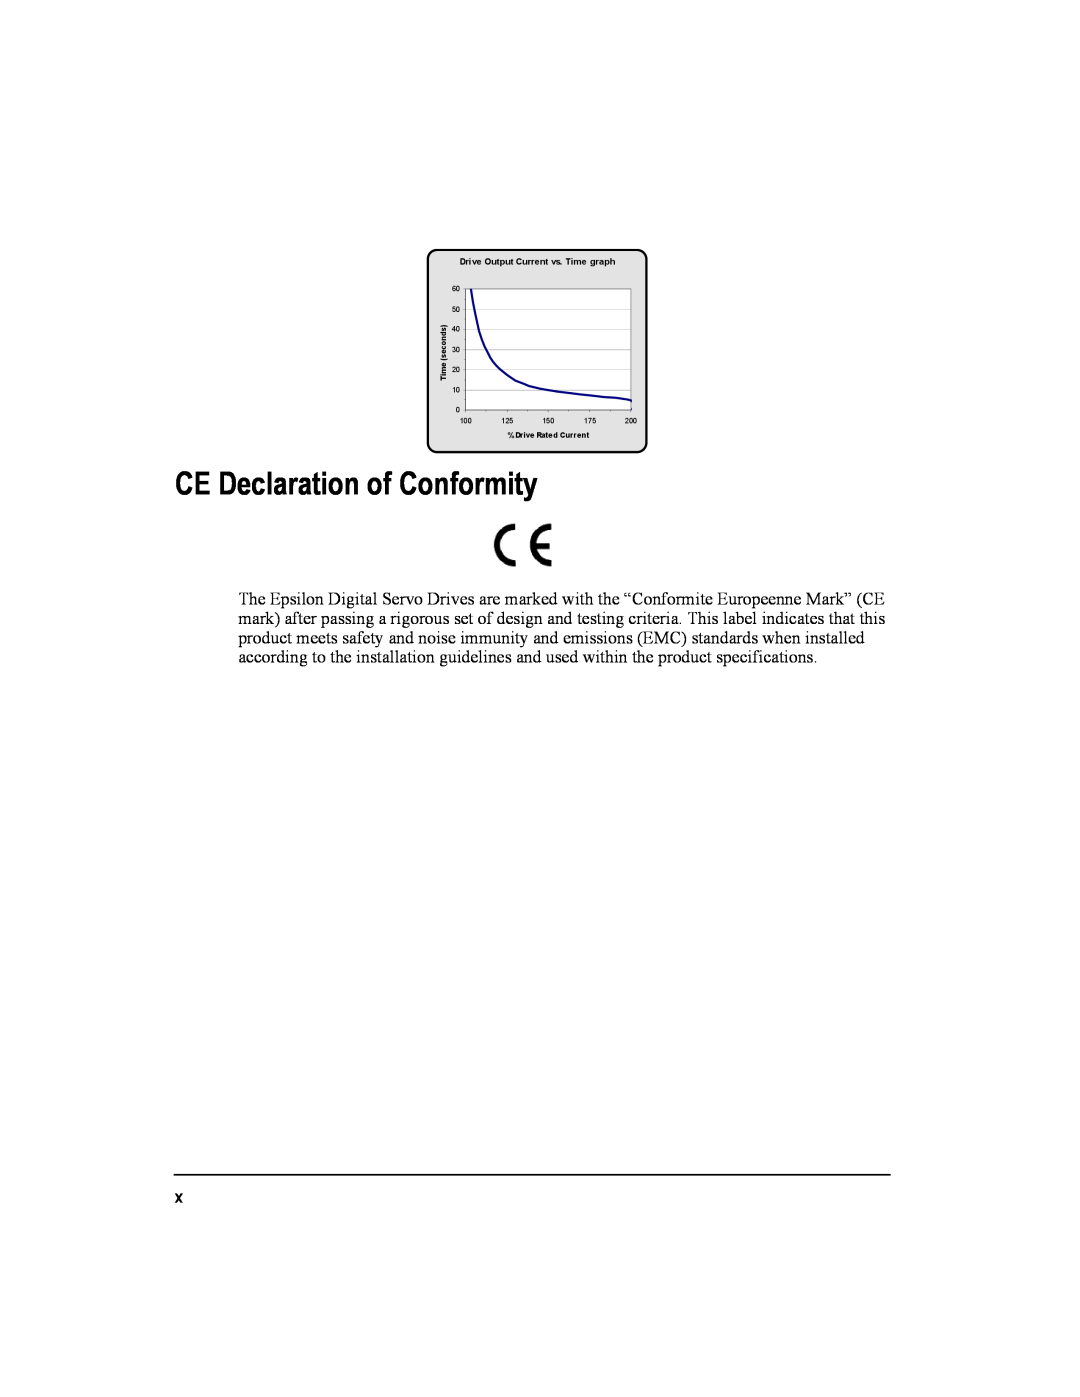 Emerson 400501-05, Epsilon Eb Digital Servo Drive CE Declaration of Conformity, Drive Output Current vs. Time graph 